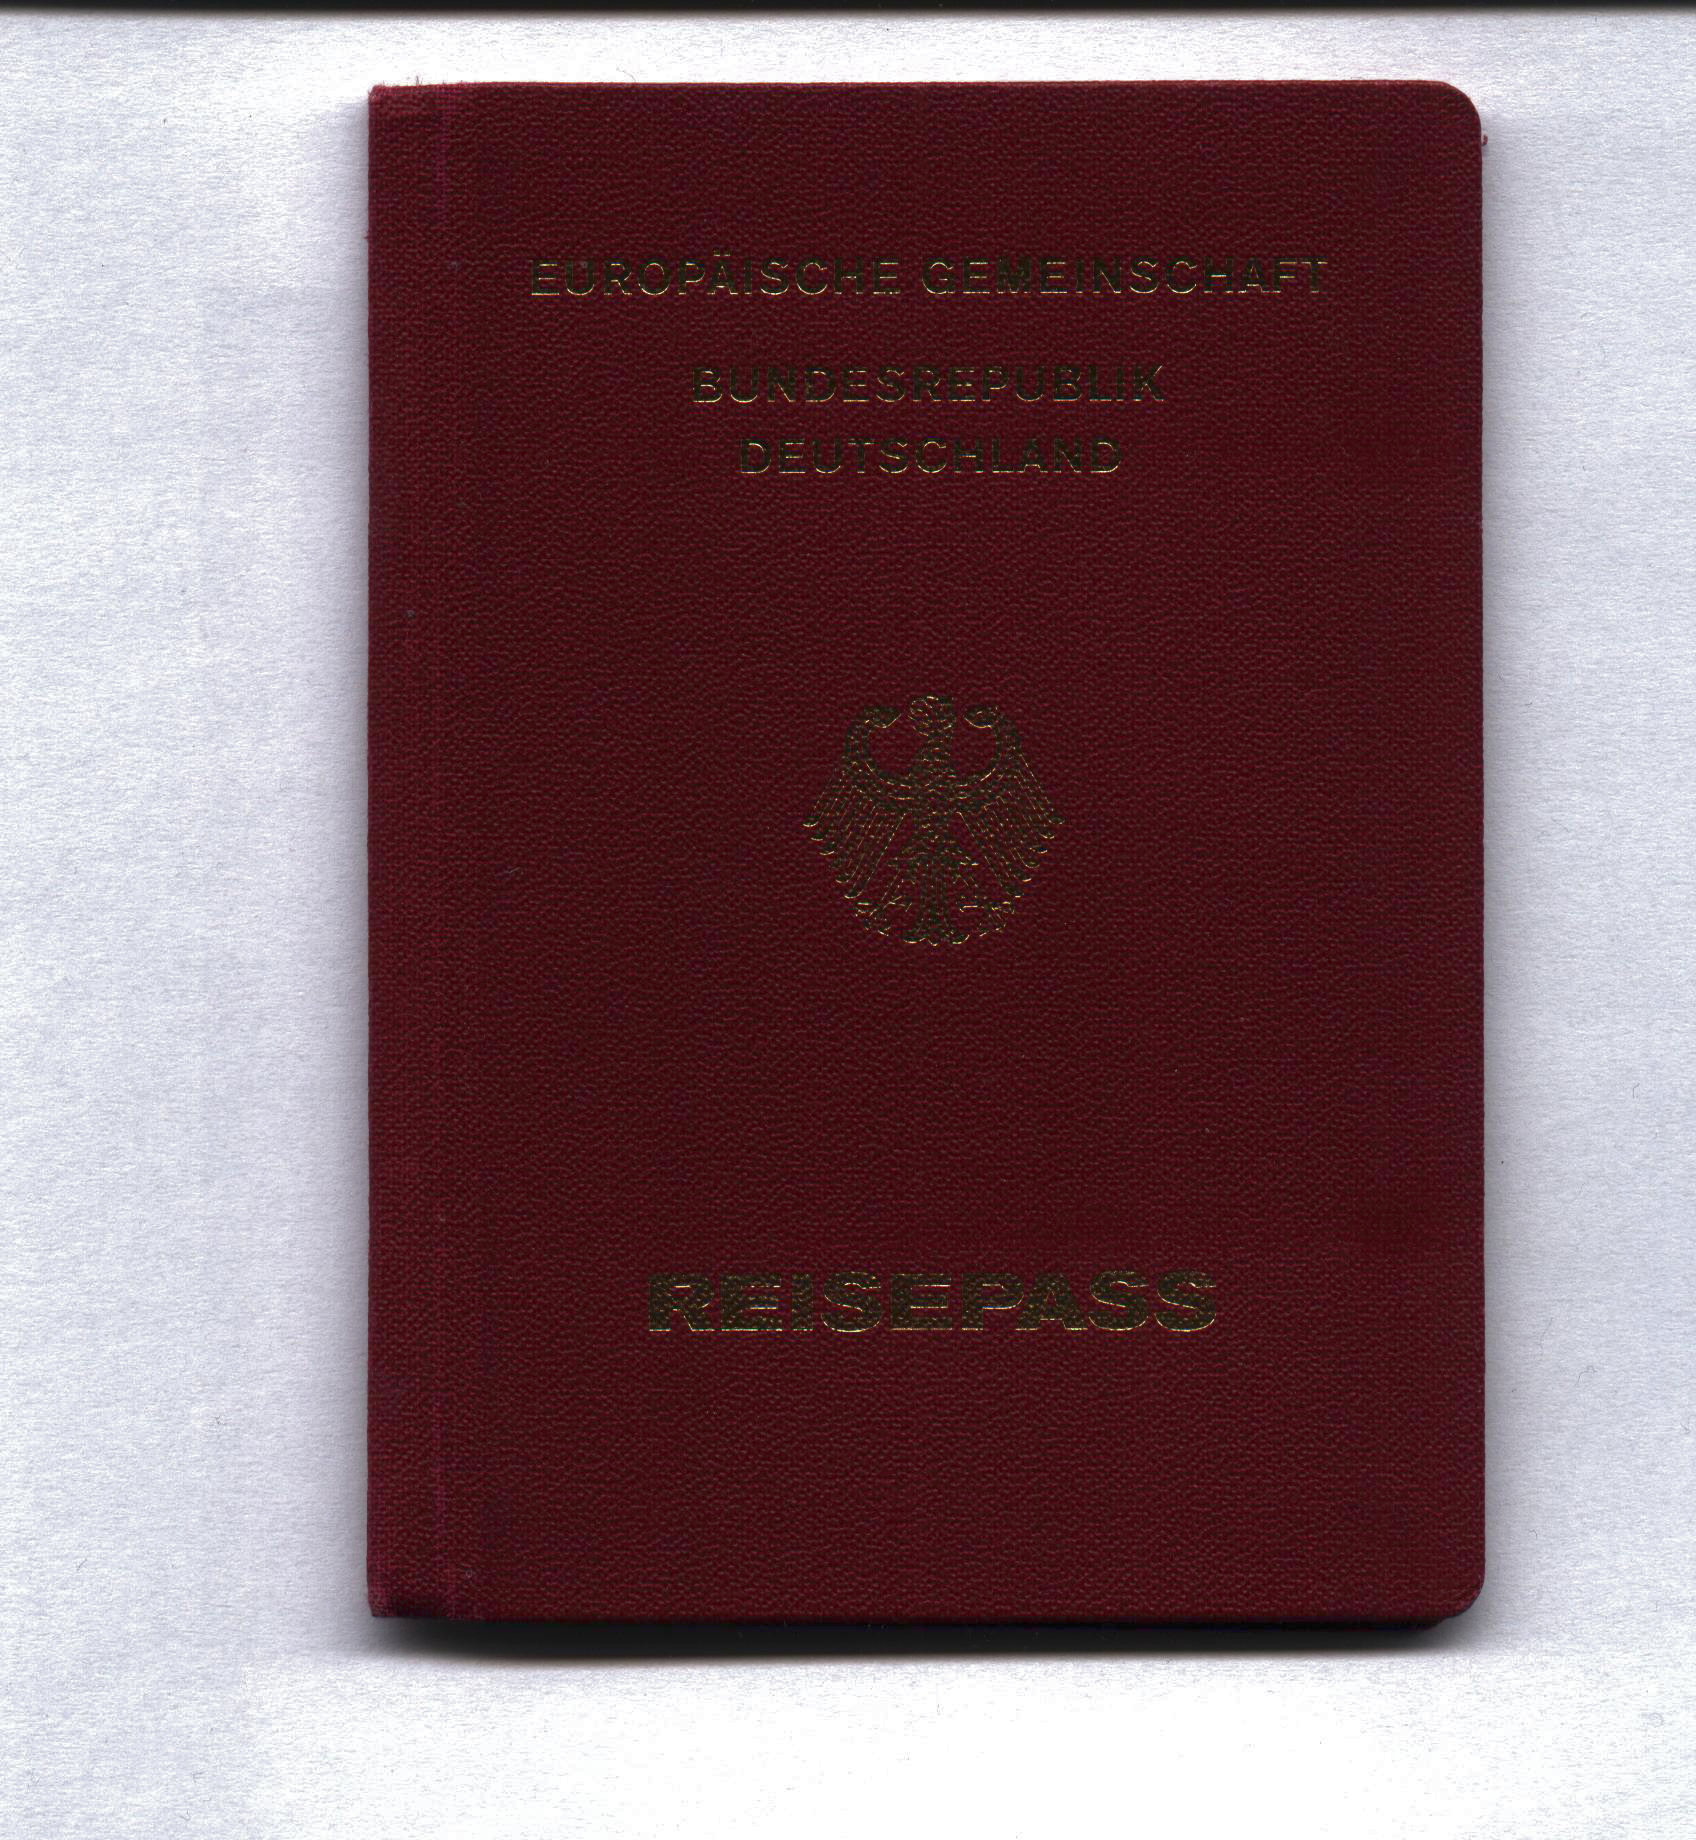 German Passport Actual Size Image